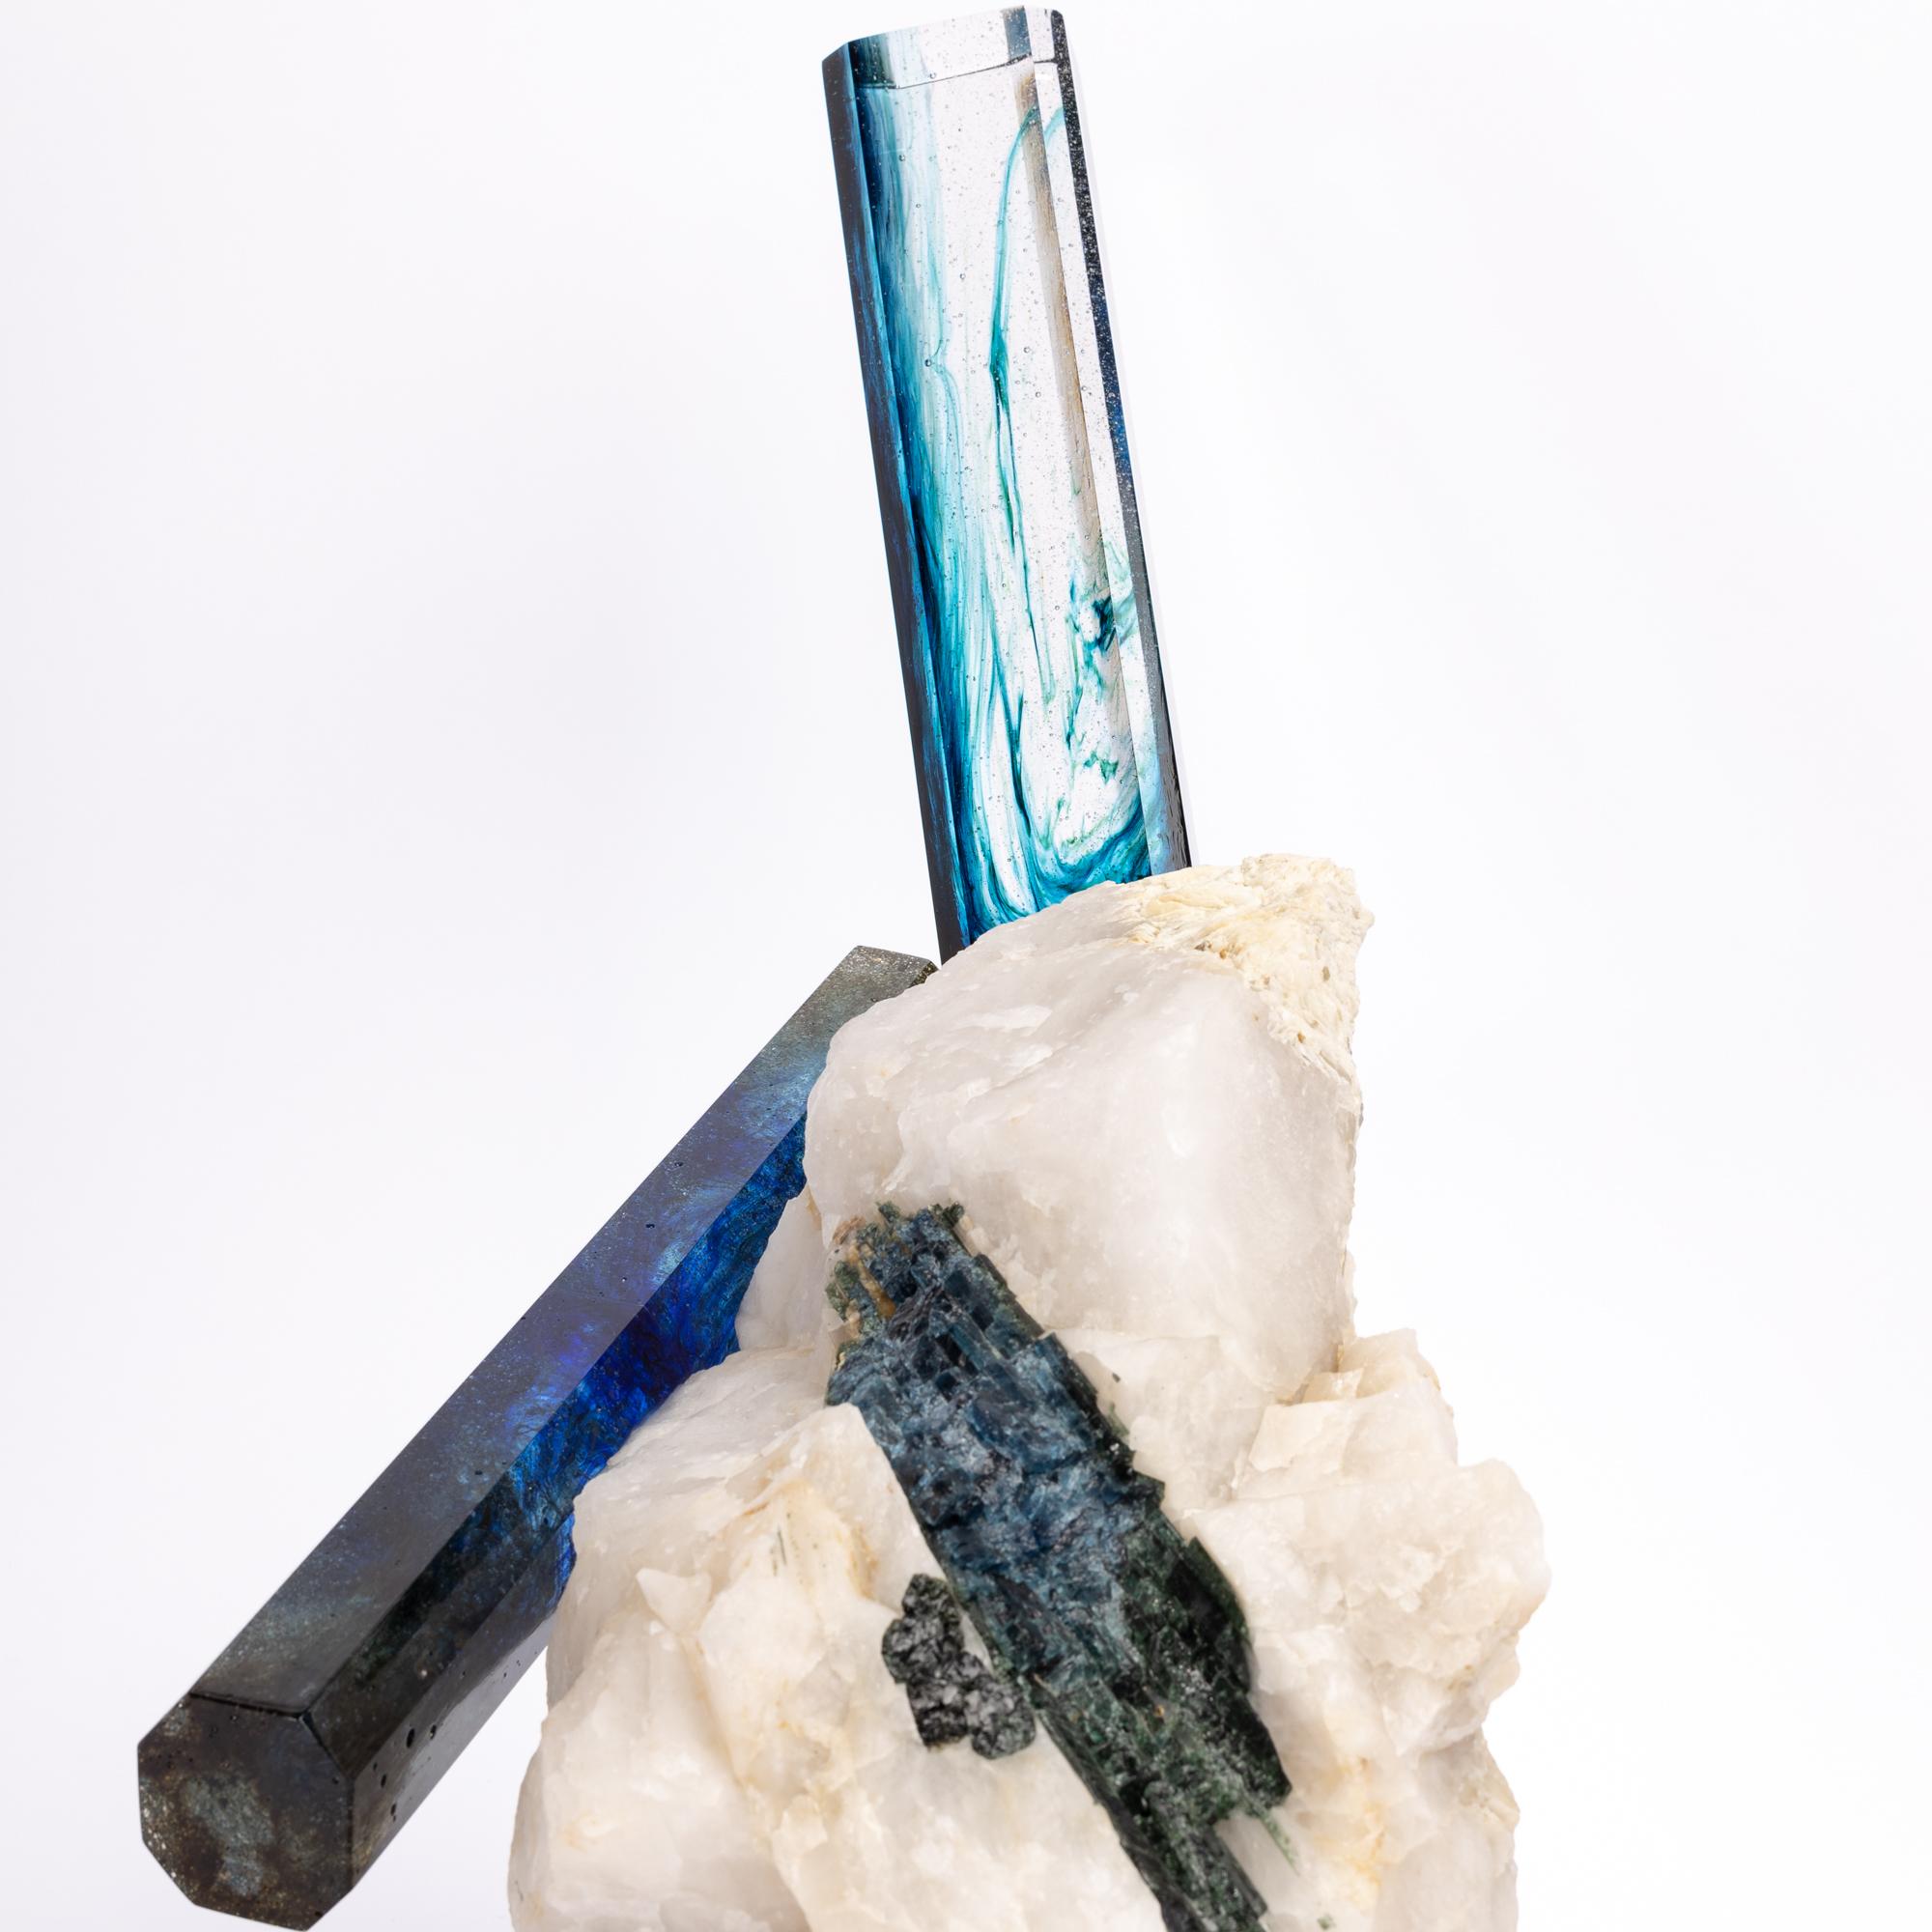 Tourmaline, Quartz and Glass Blue Shade Sculpture 6